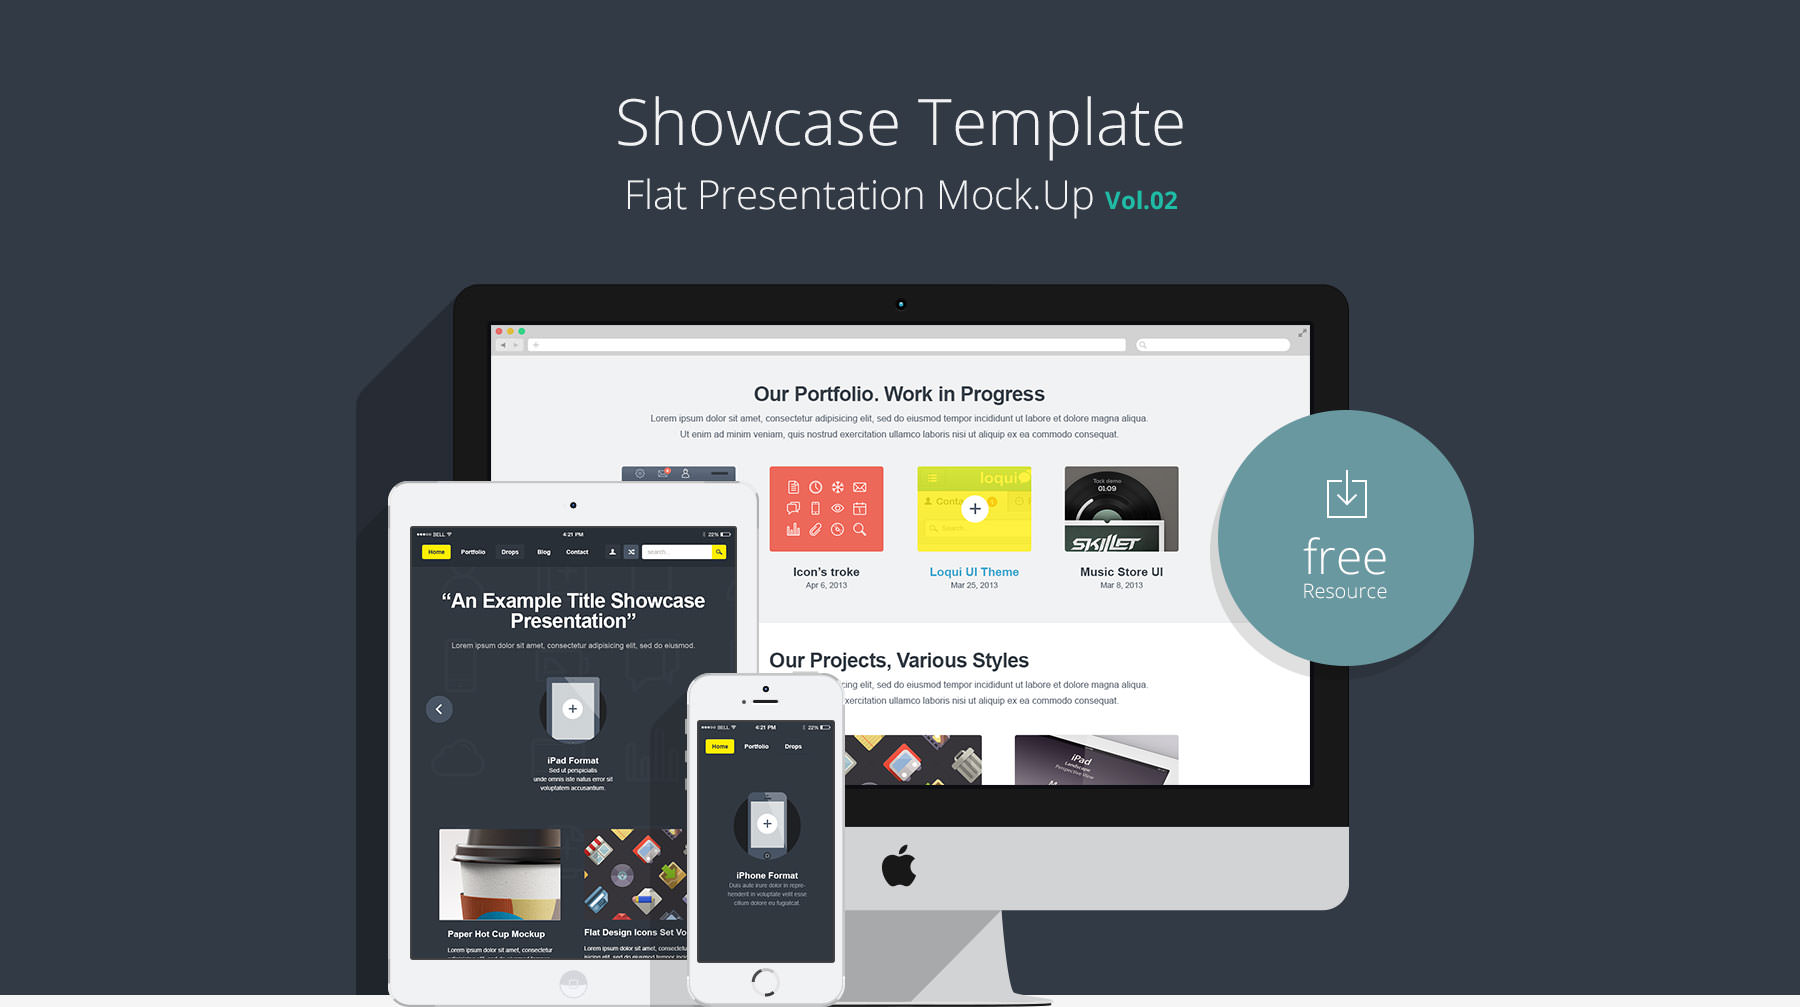 Showcase-Template-Flat-Presentation-Vol-2